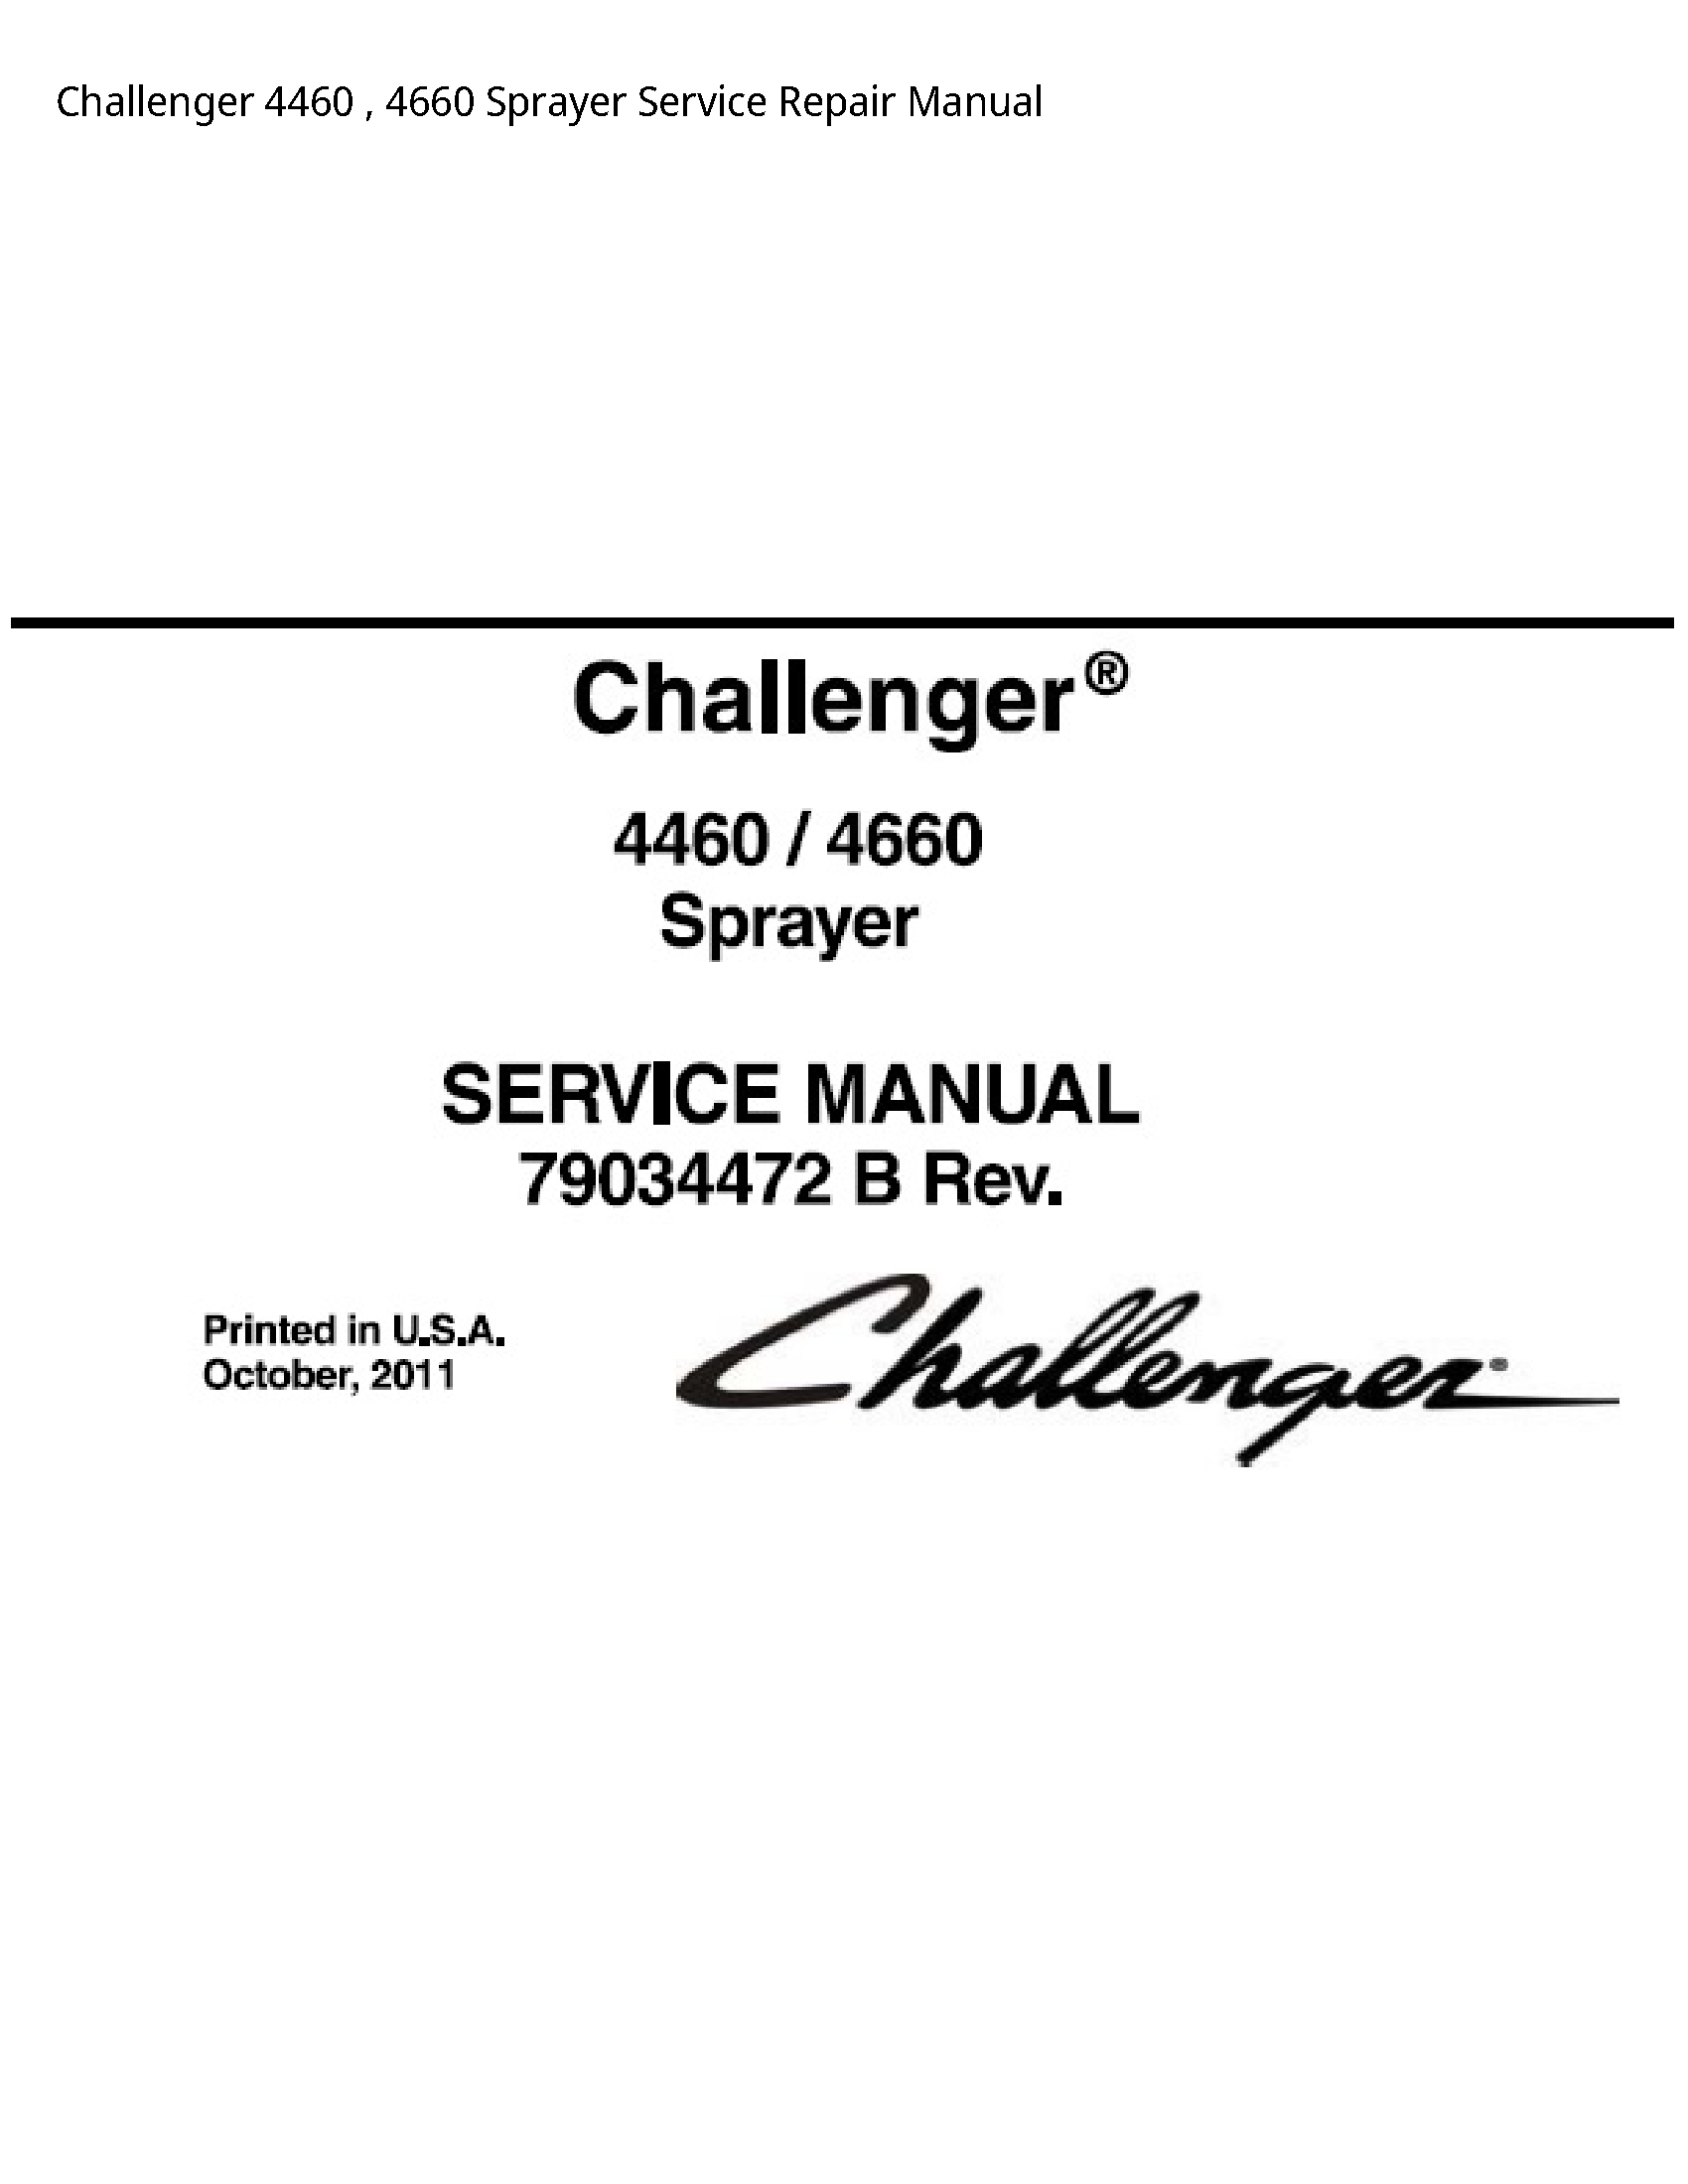 Challenger 4460 Sprayer manual